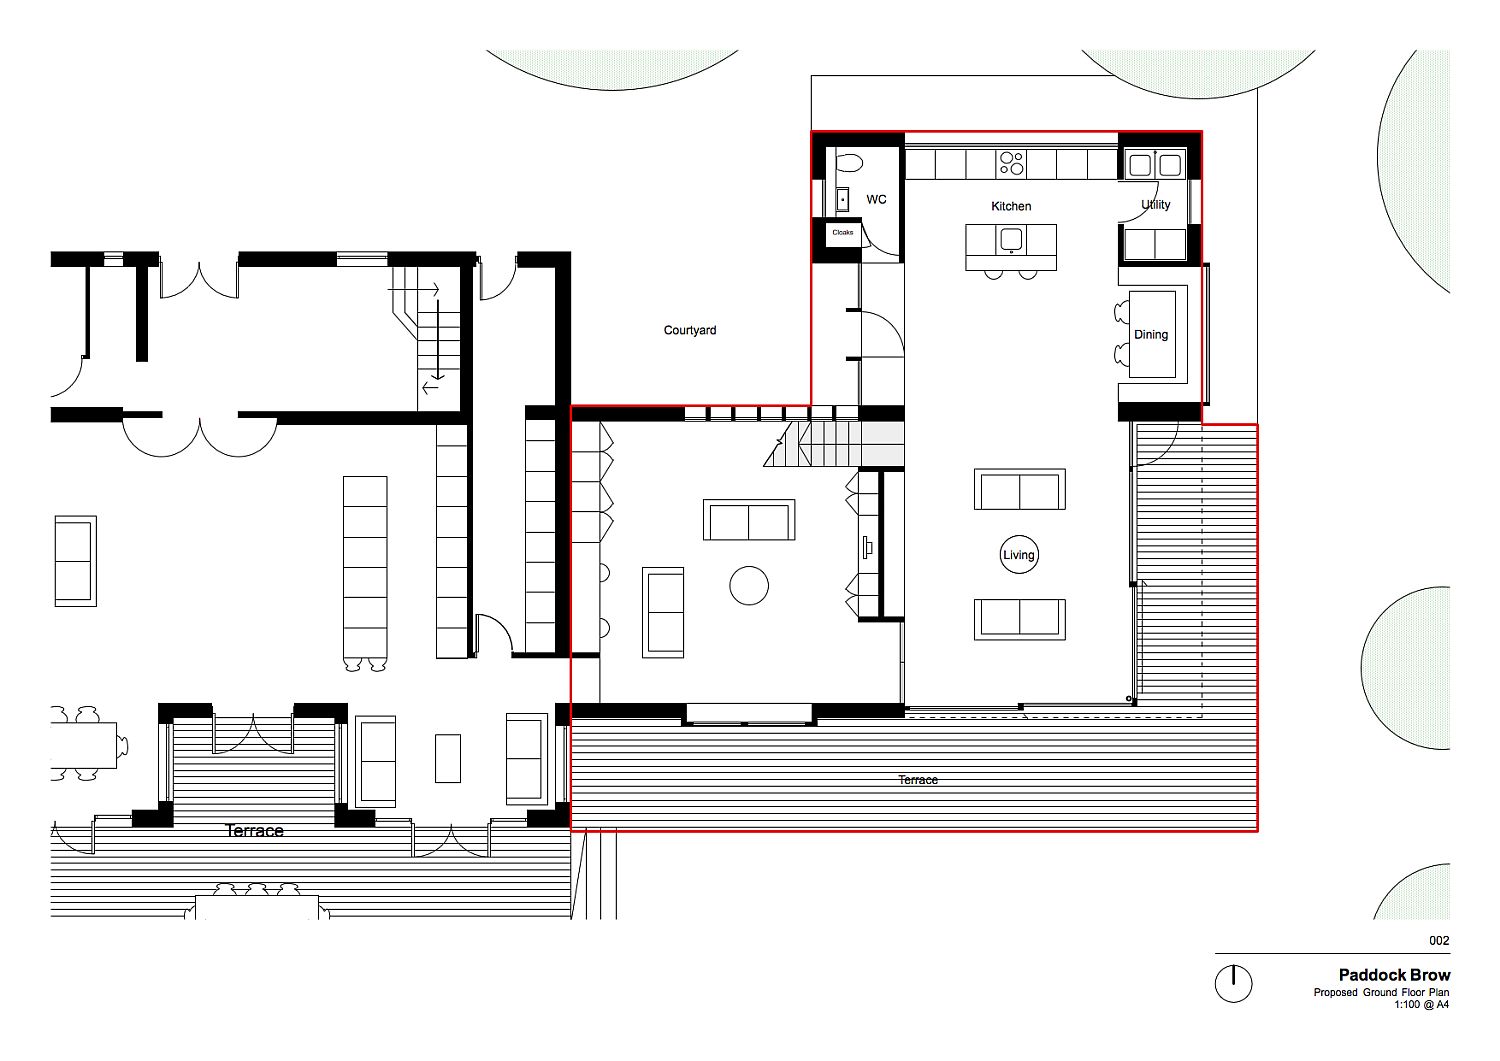 Design plan of Paddock Brow Guesthouse in UK